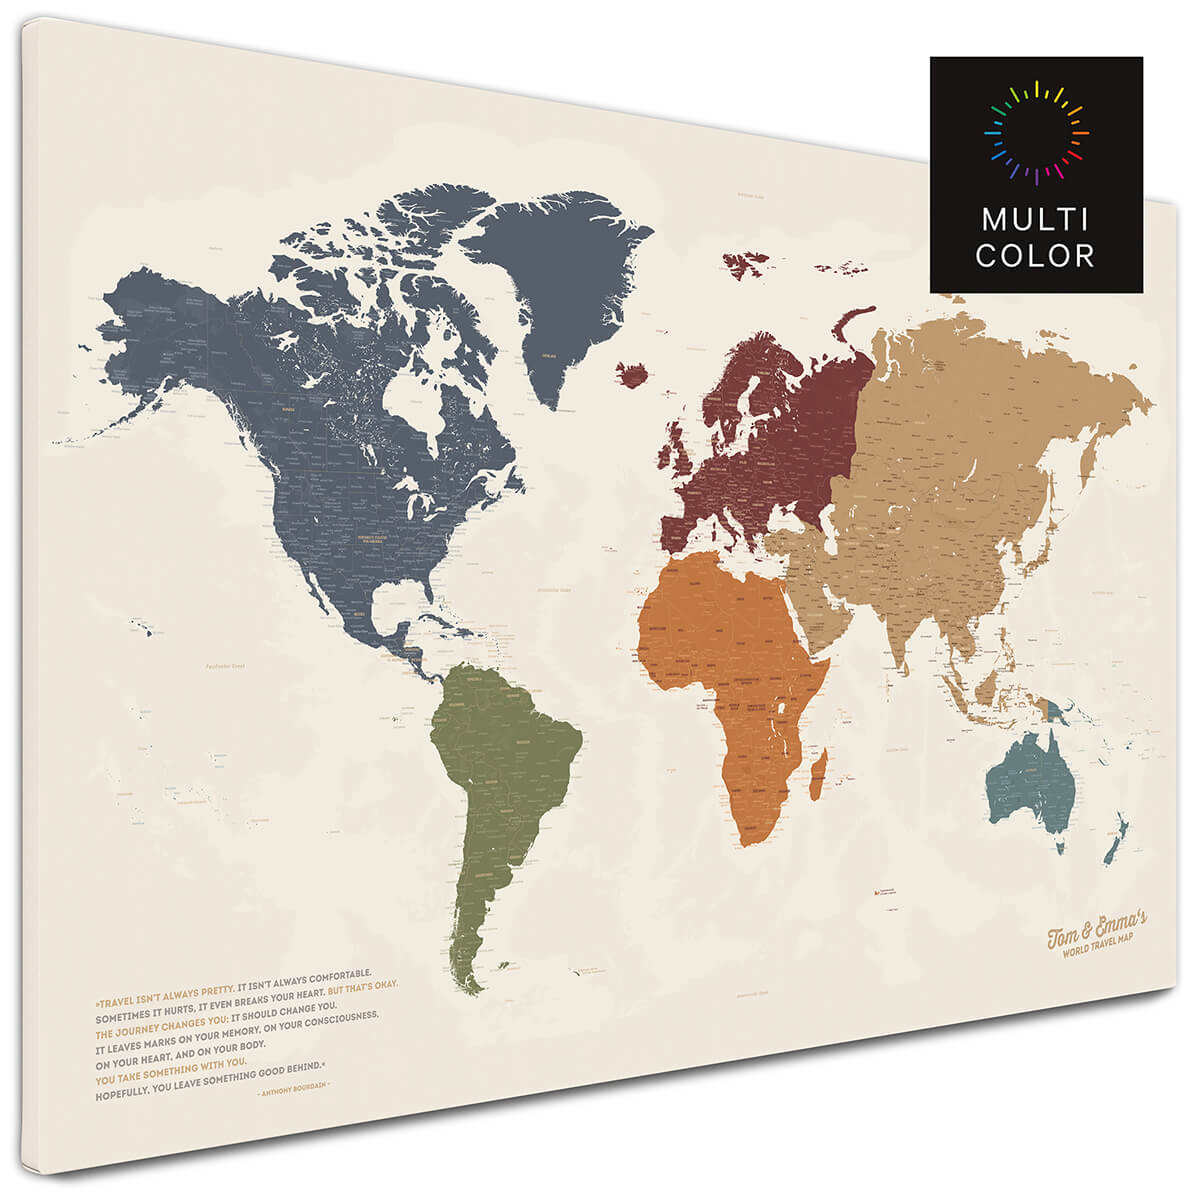 Weltkarte als Pinnwand in Multicolor kaufen